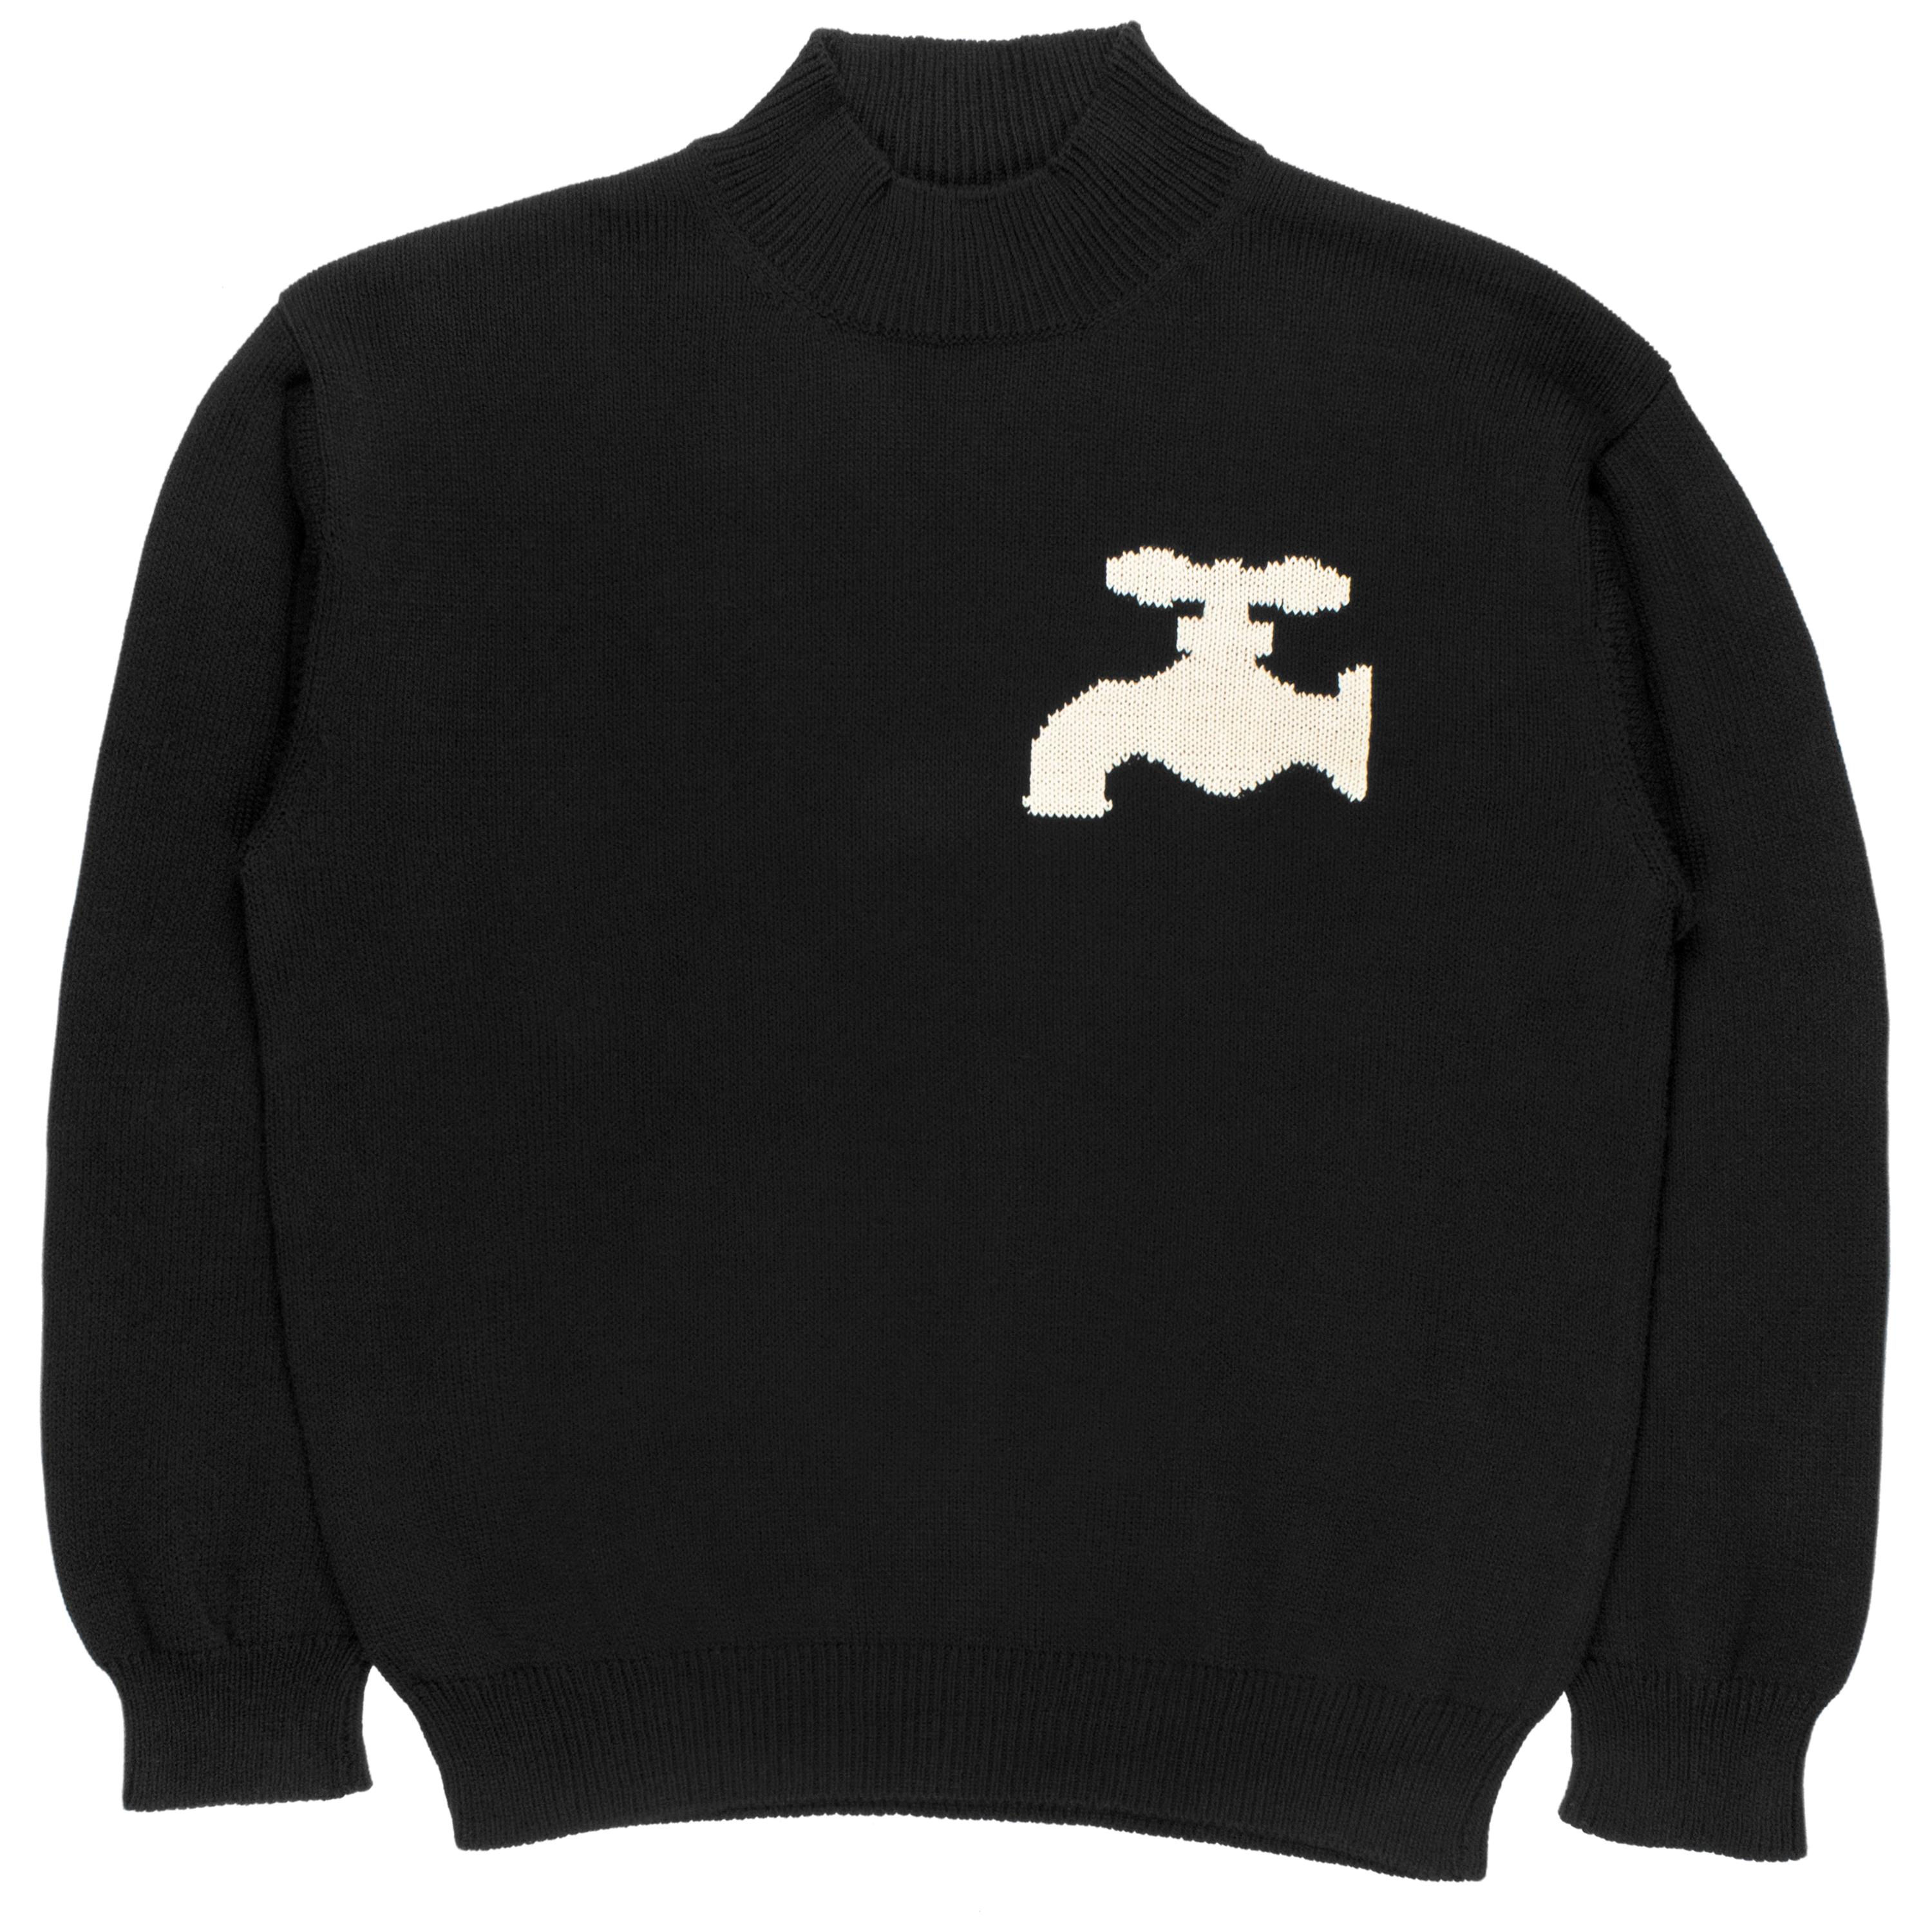 Yohji Yamamoto Y's for Men Faucet Sweater